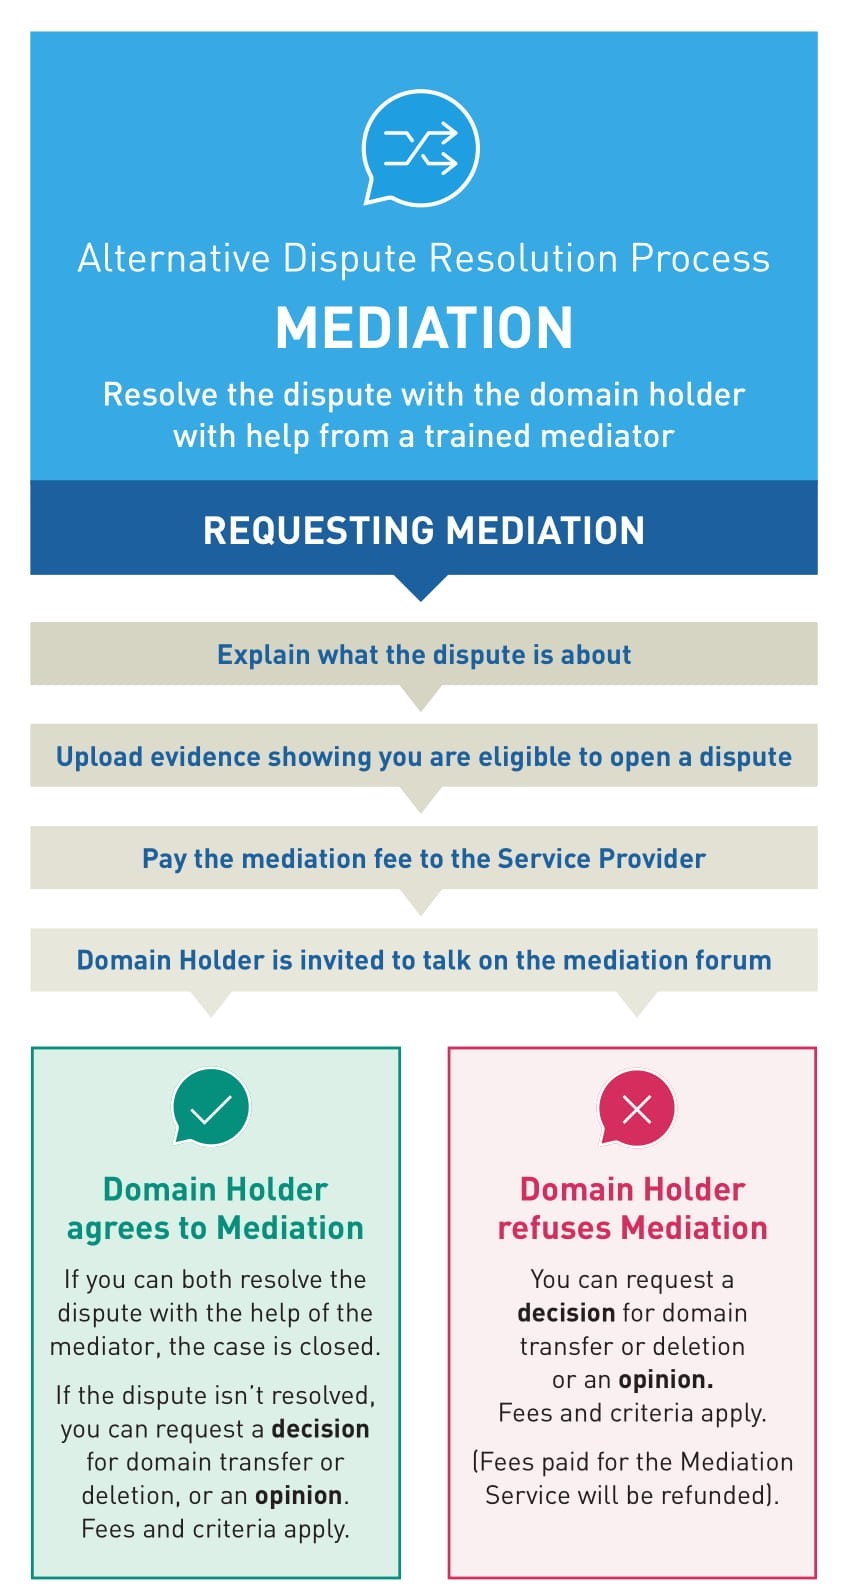 Alternative Dispute Resolution Process Graphic: Mediation